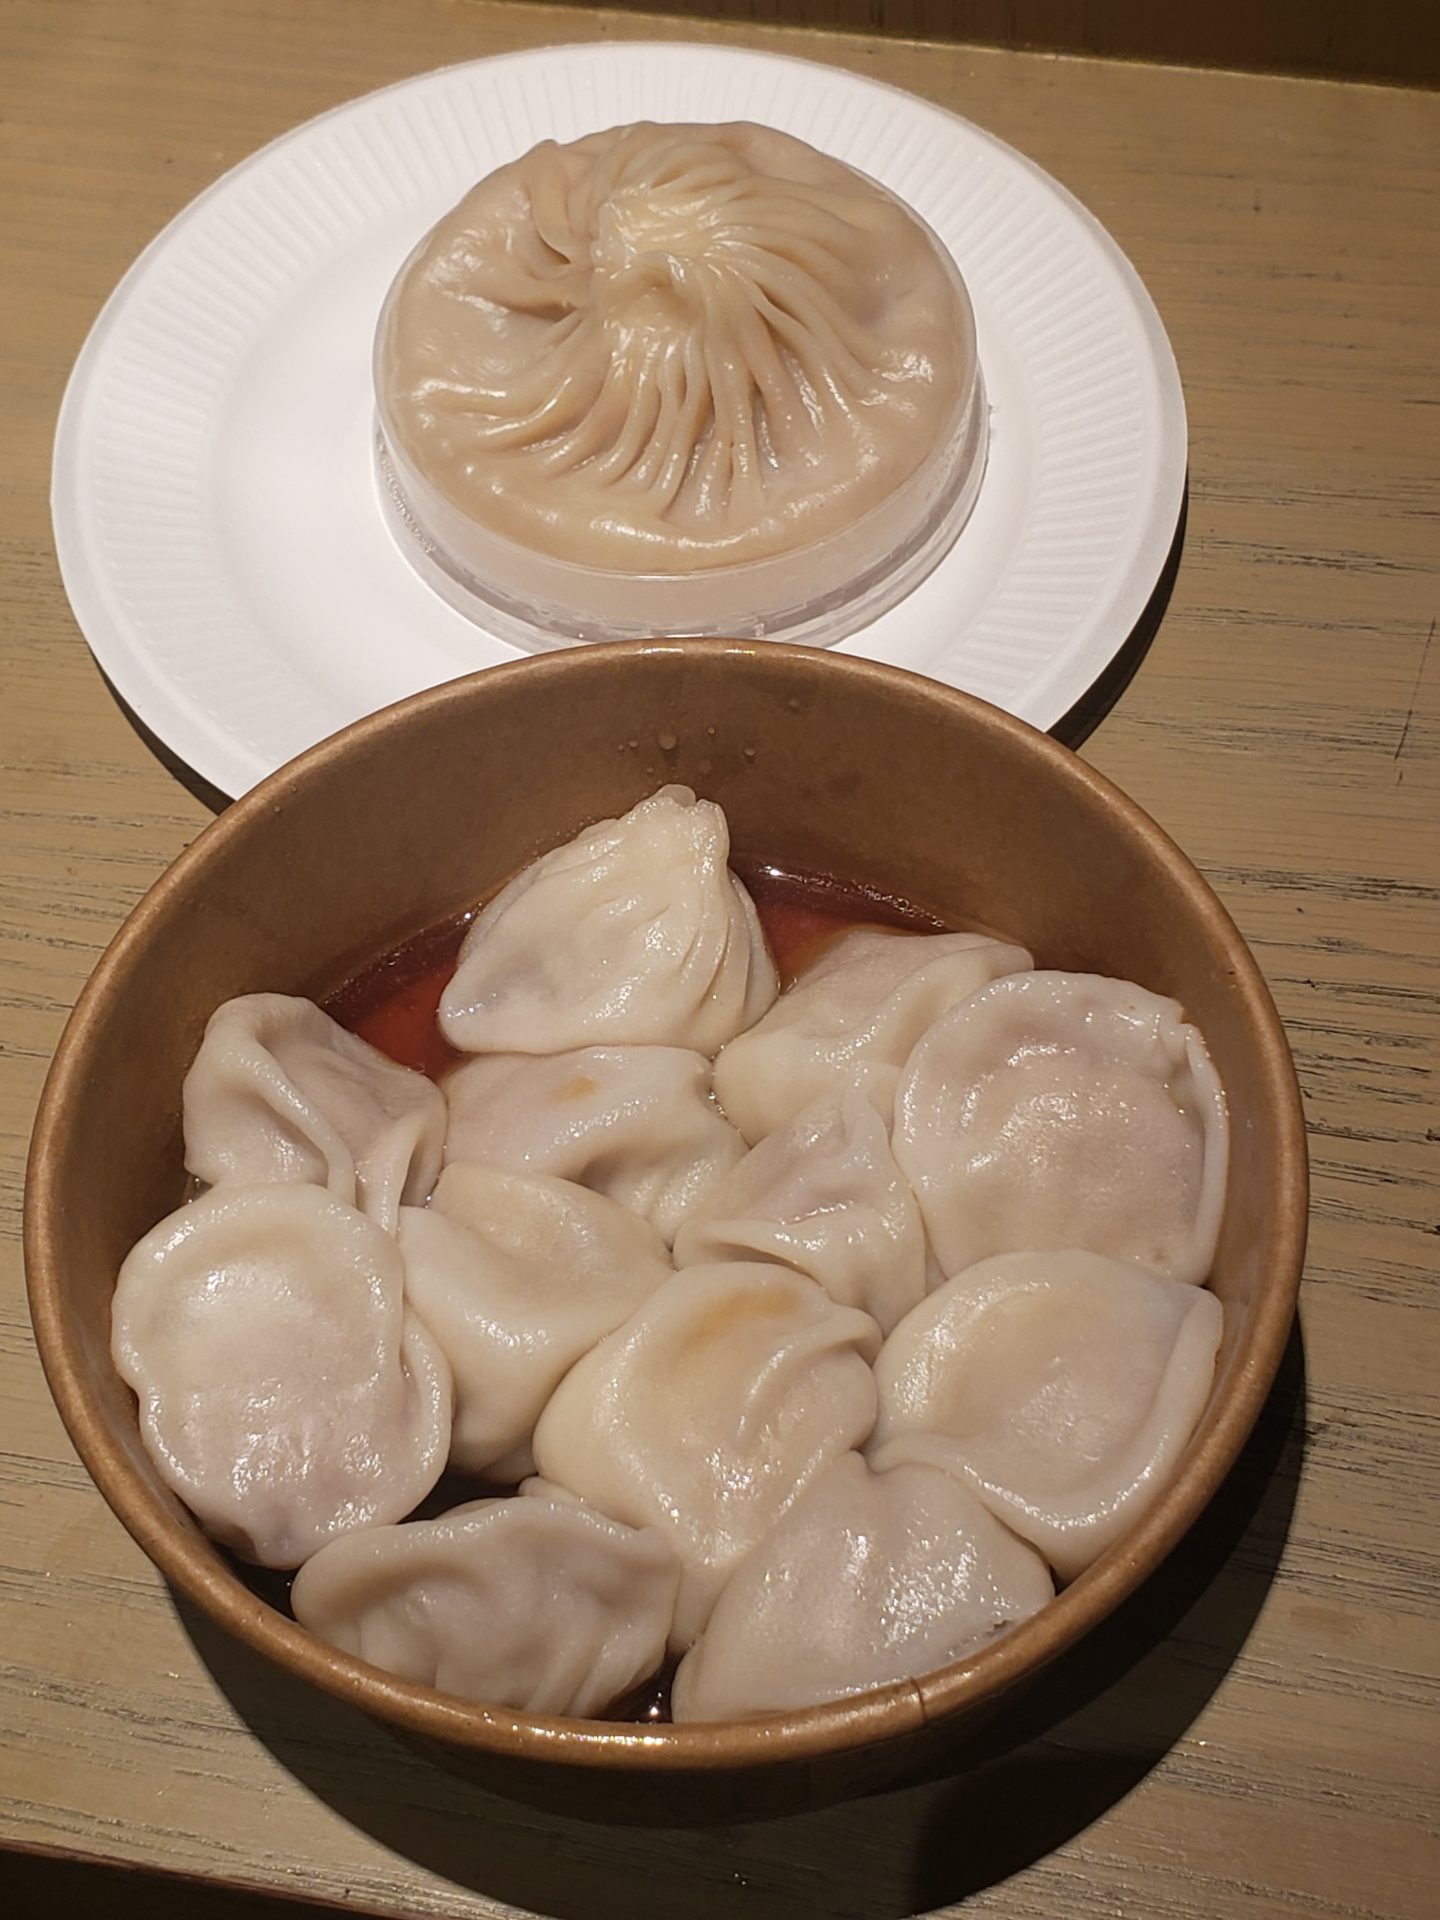 a bowl of dumplings on a plate